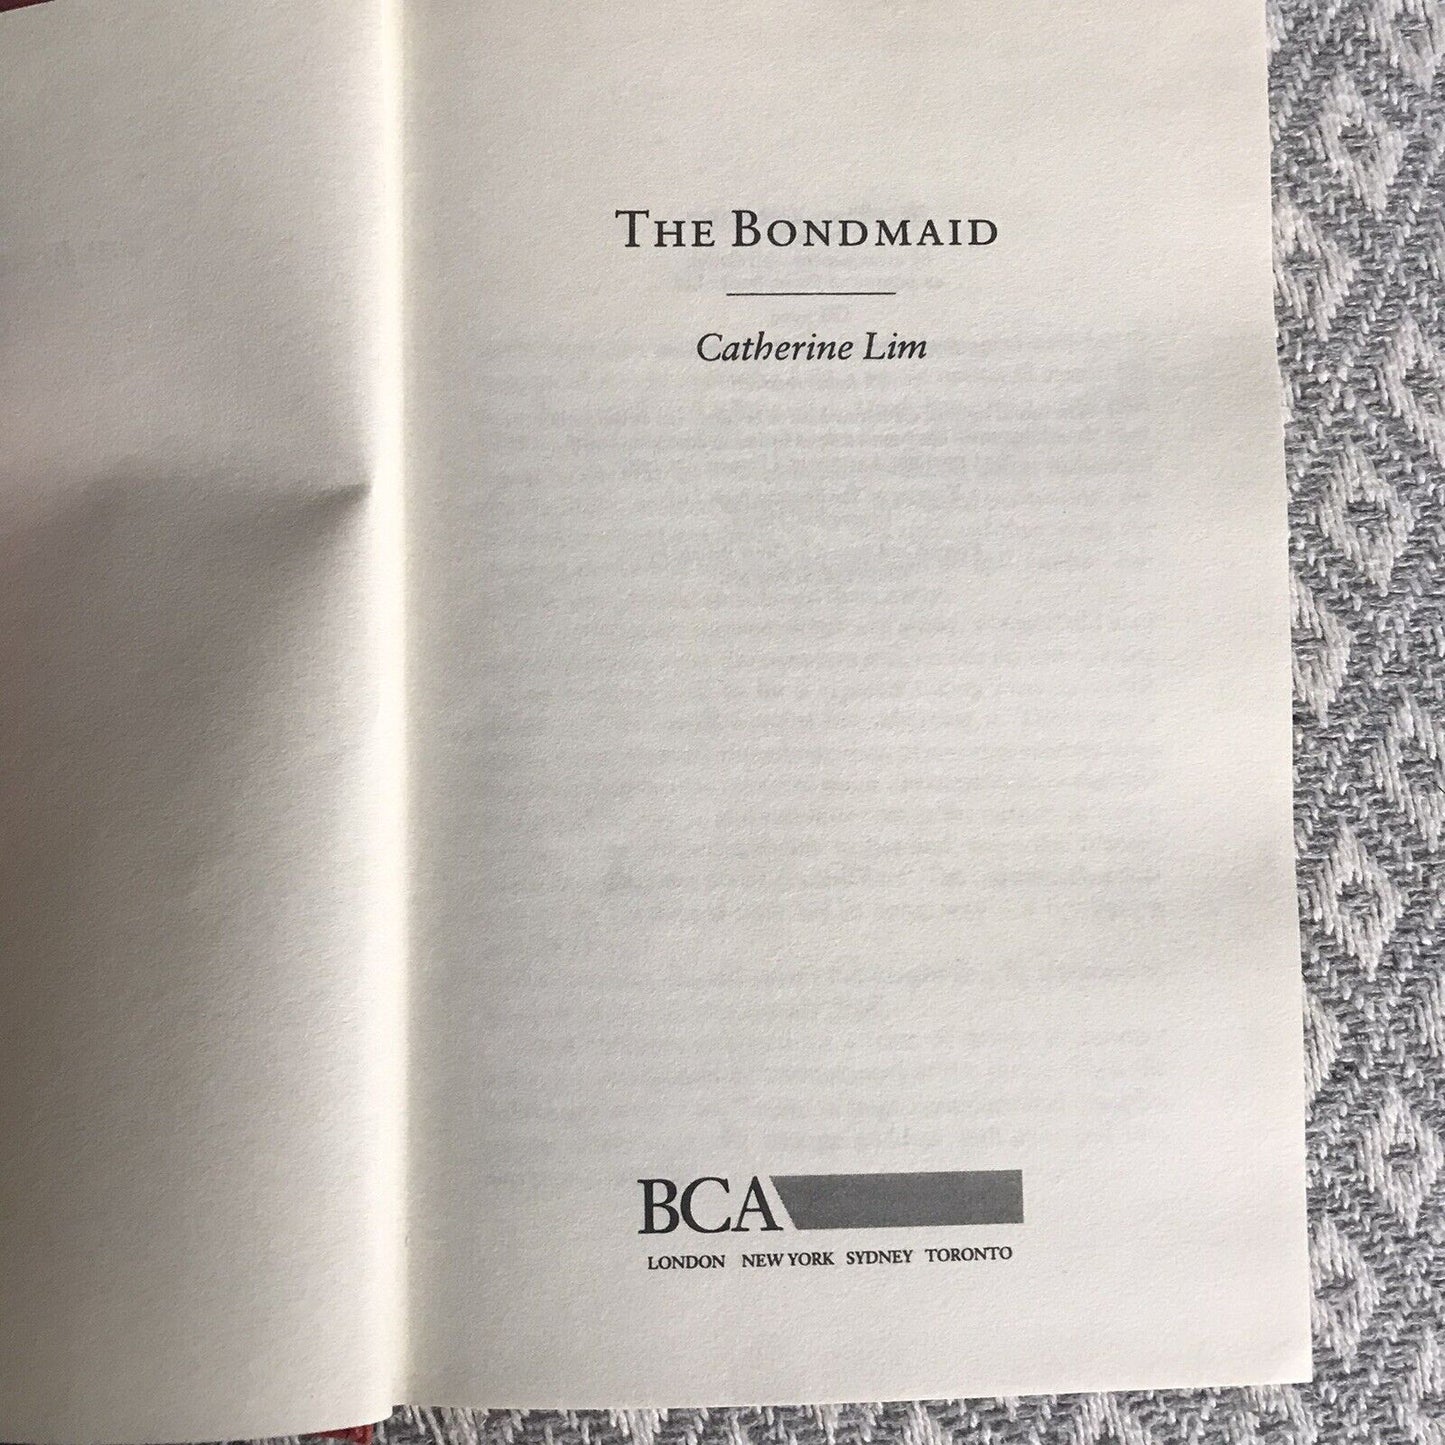 1997*1st*The Bondmaid by Catherine Lim (BCA publisher) hardback